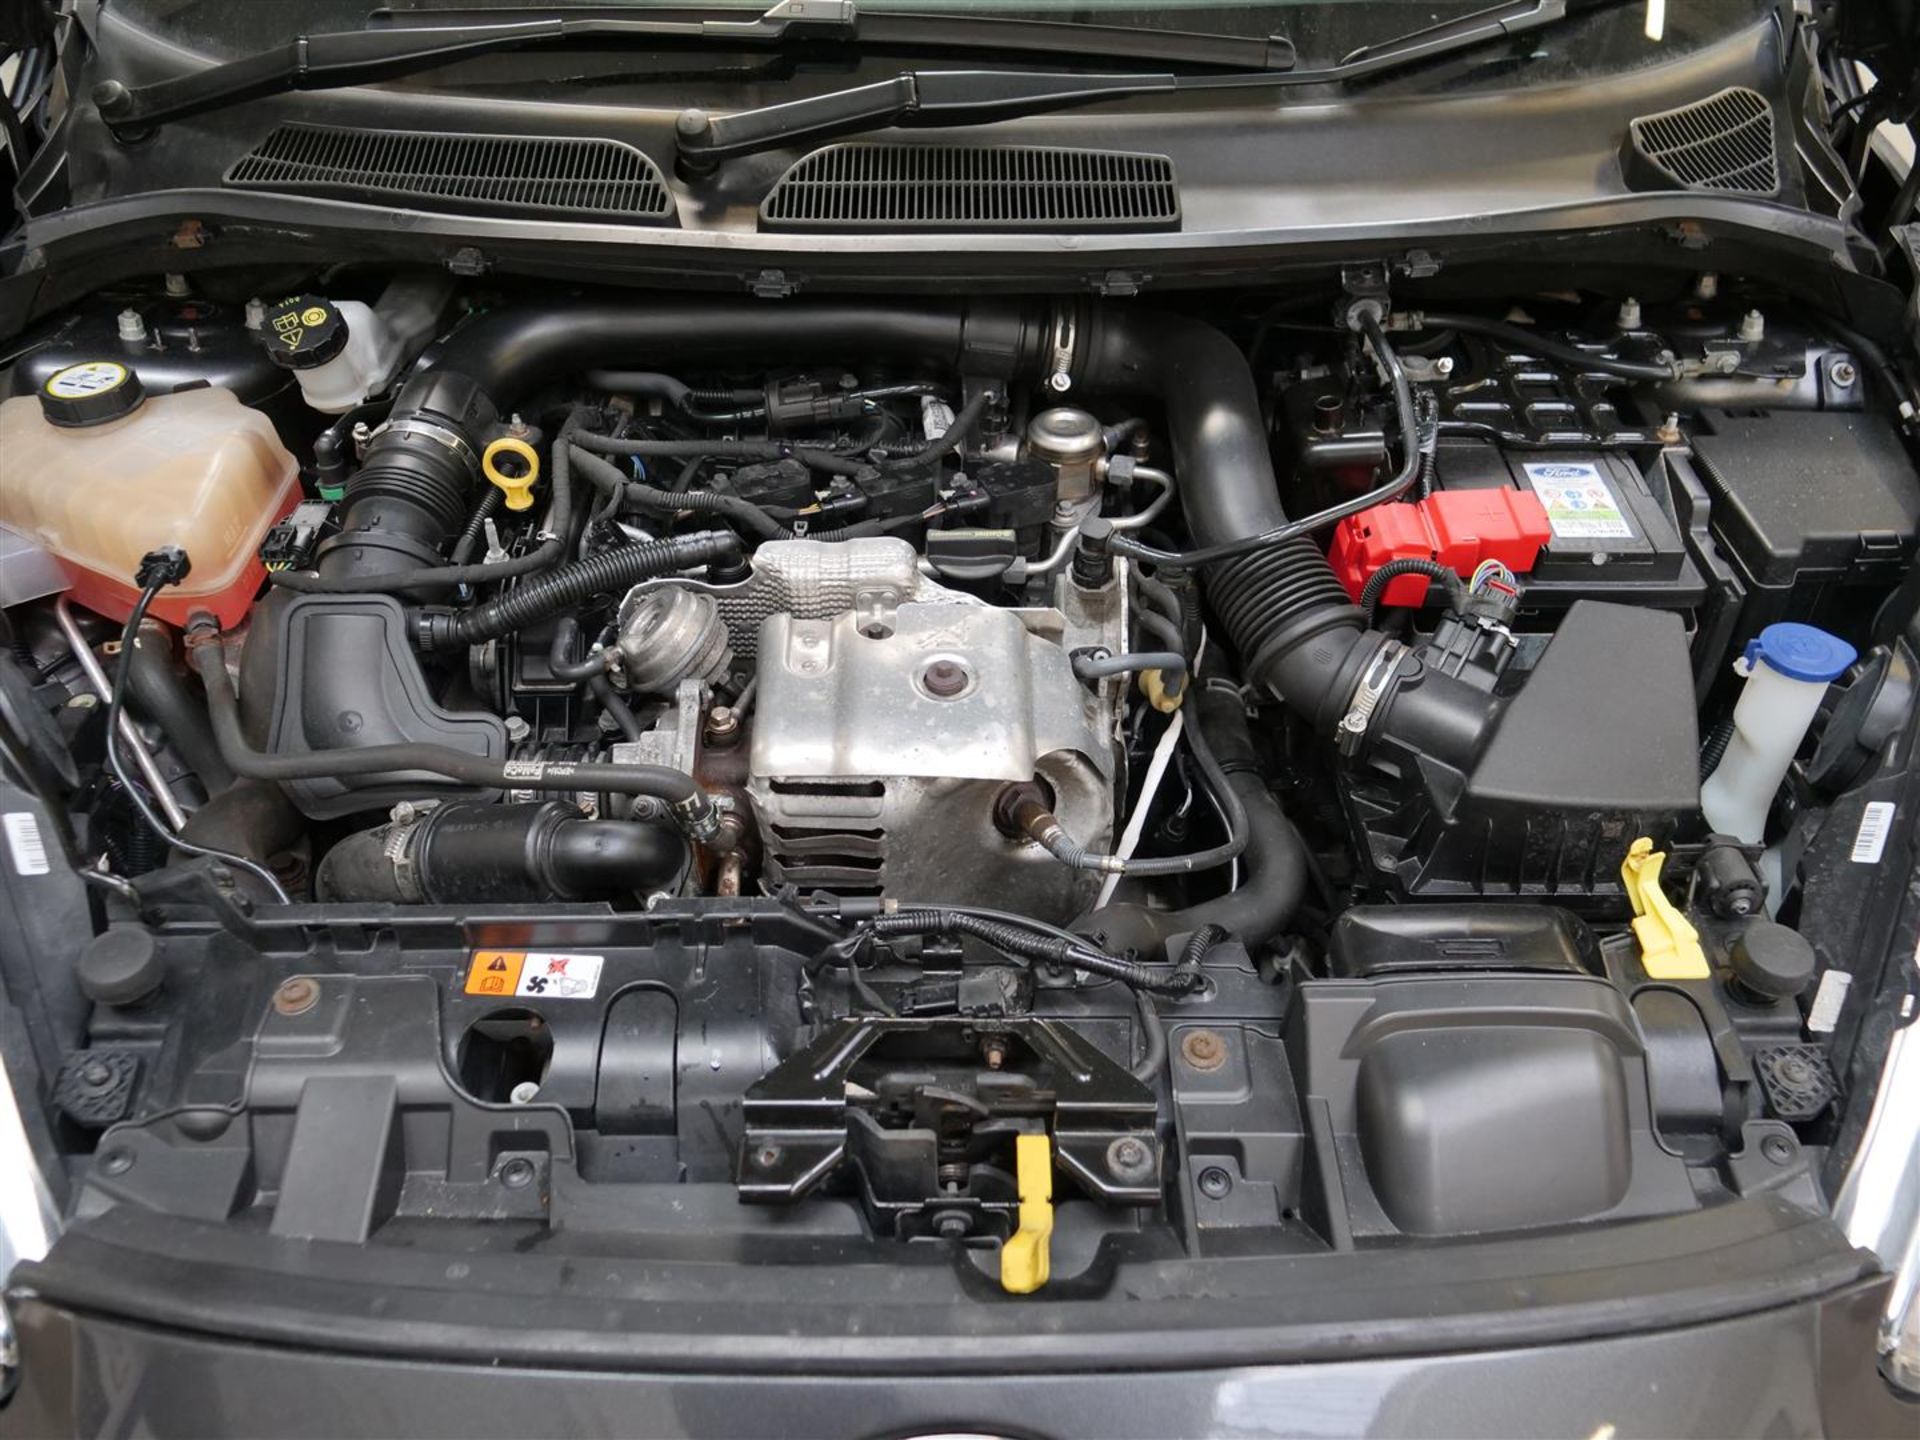 65 15 Ford Fiesta Zetec Turbo - Image 11 of 23